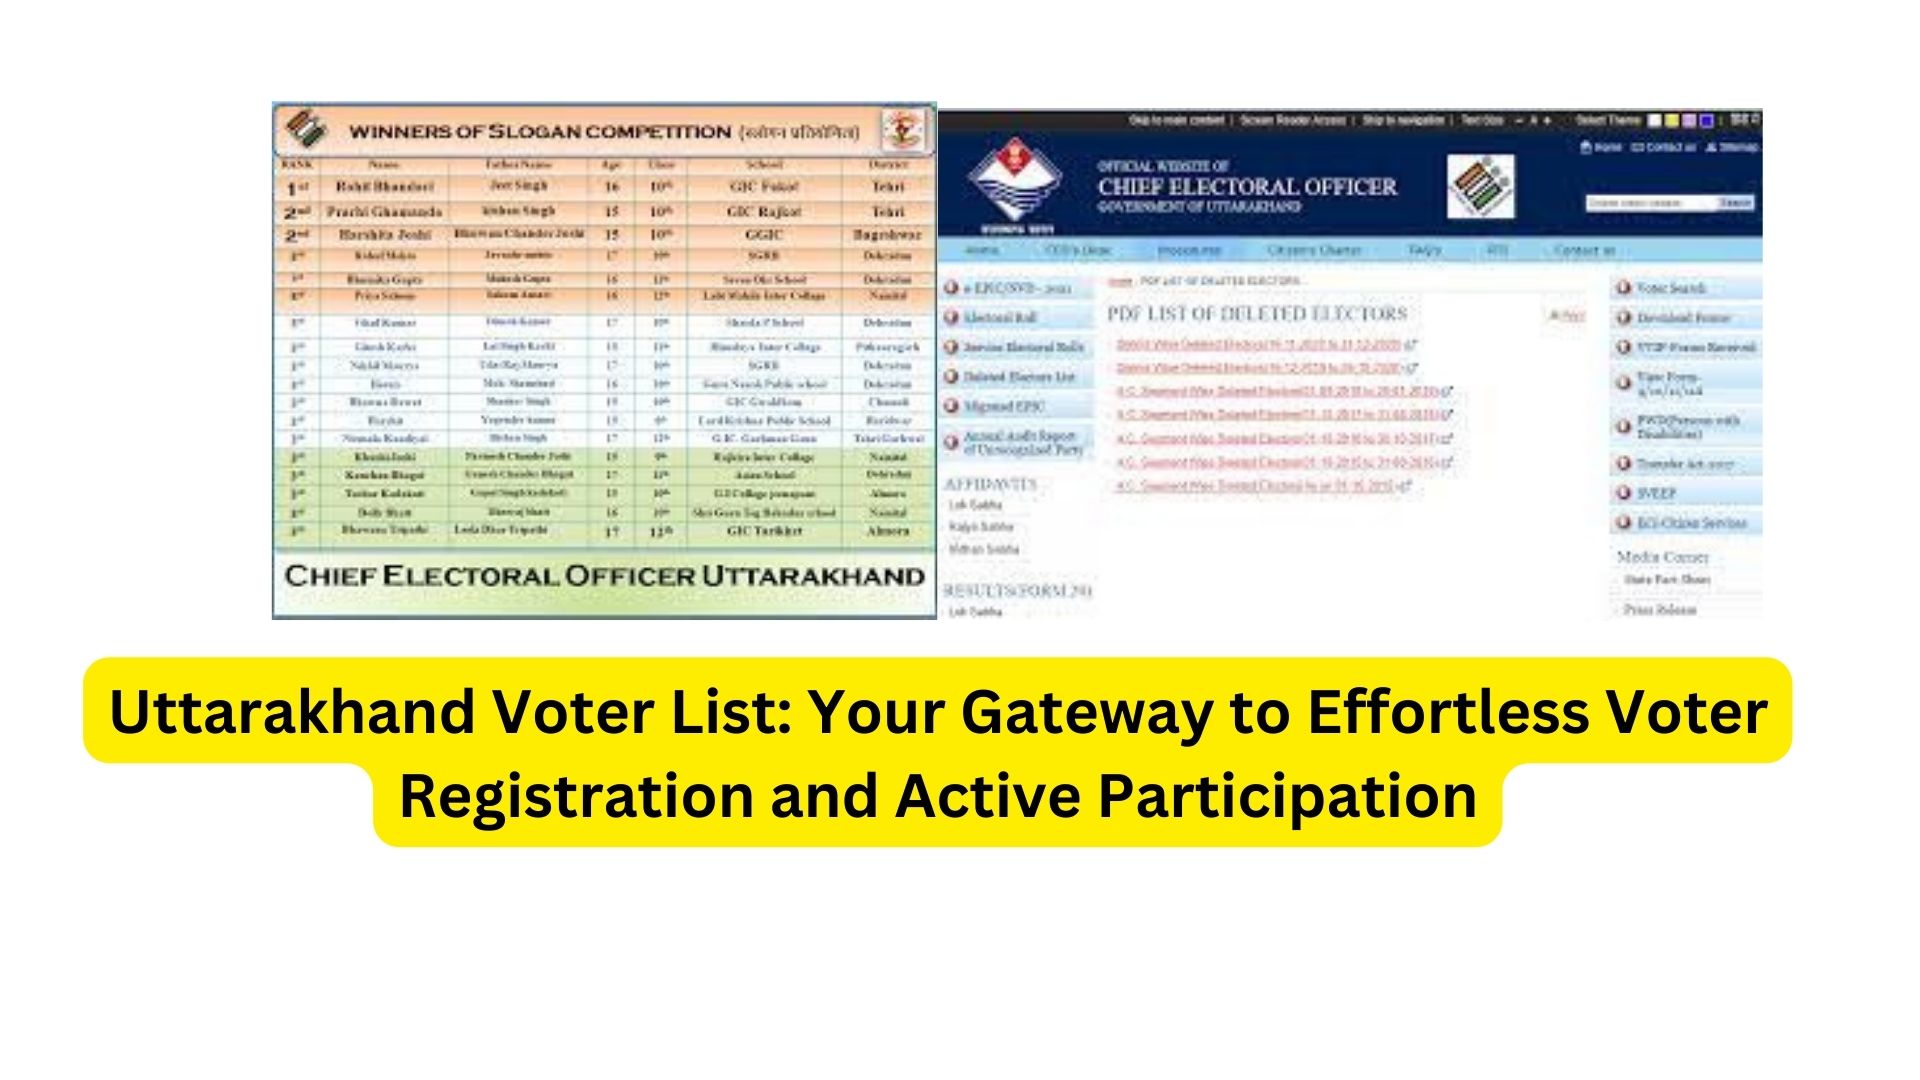 Uttarakhand Voter List: Your Gateway to Effortless Voter Registration and Active Participation